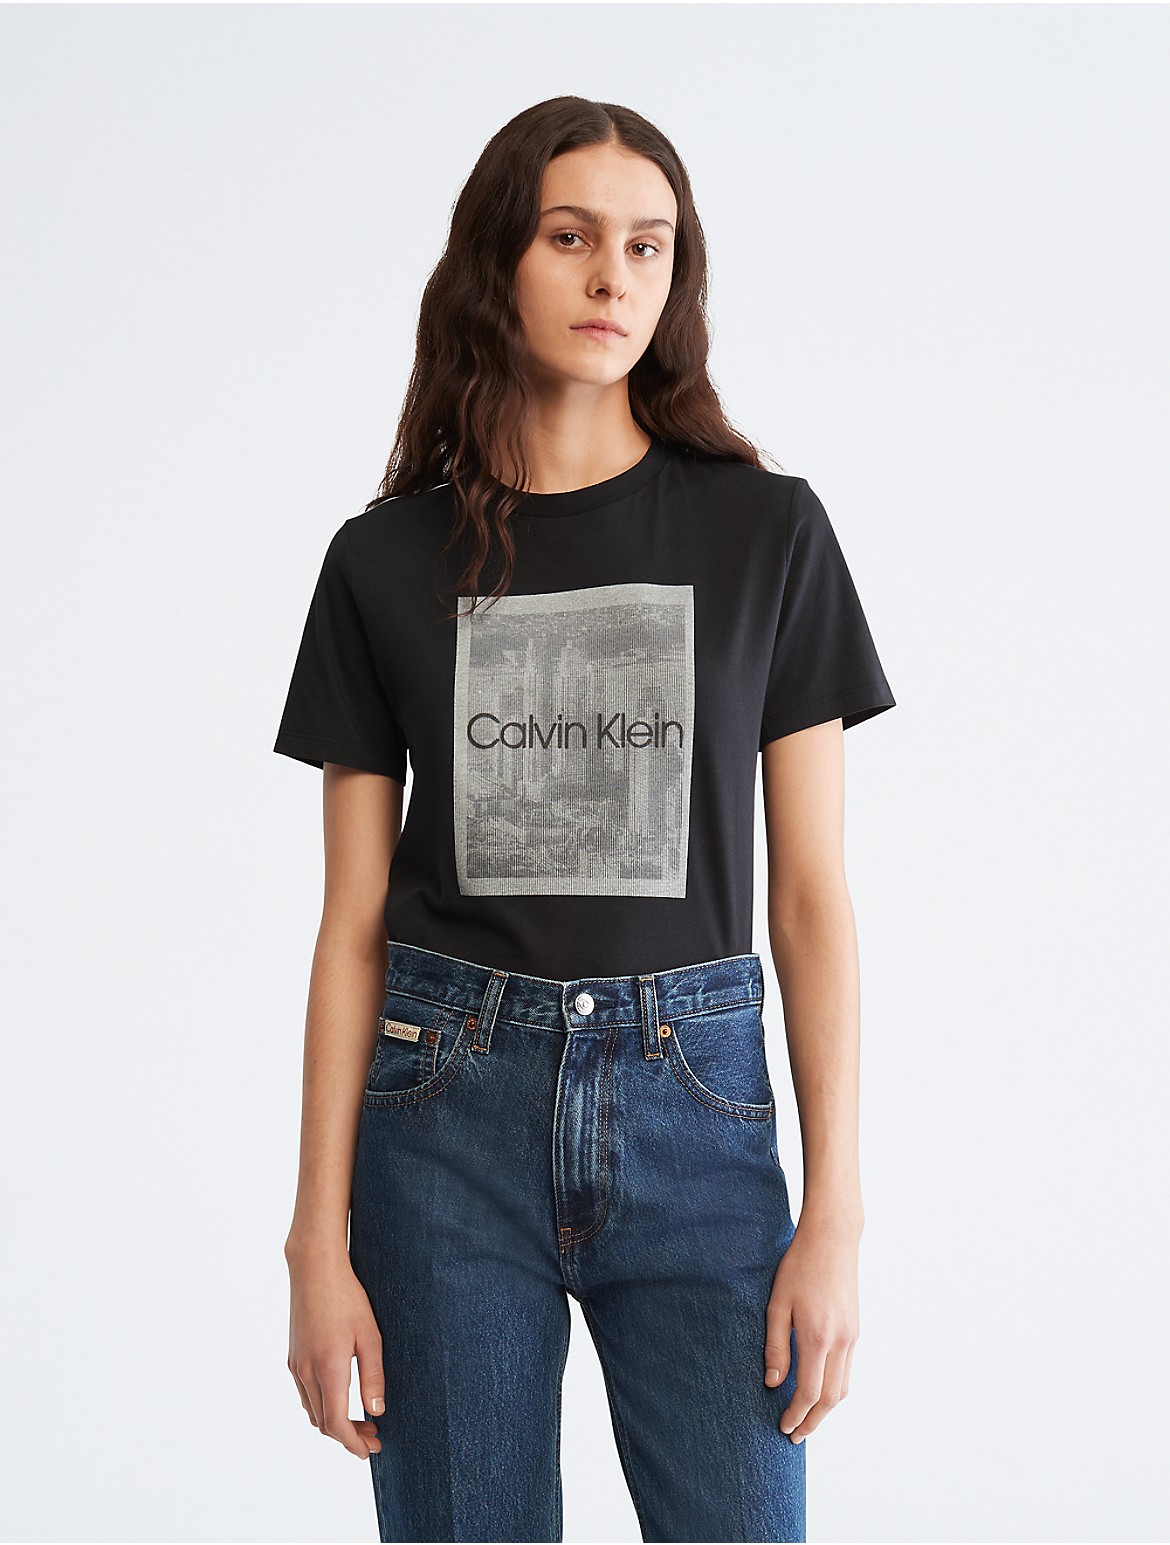 Calvin Klein Women's City Graphic Crewneck T-Shirt - Black - XS